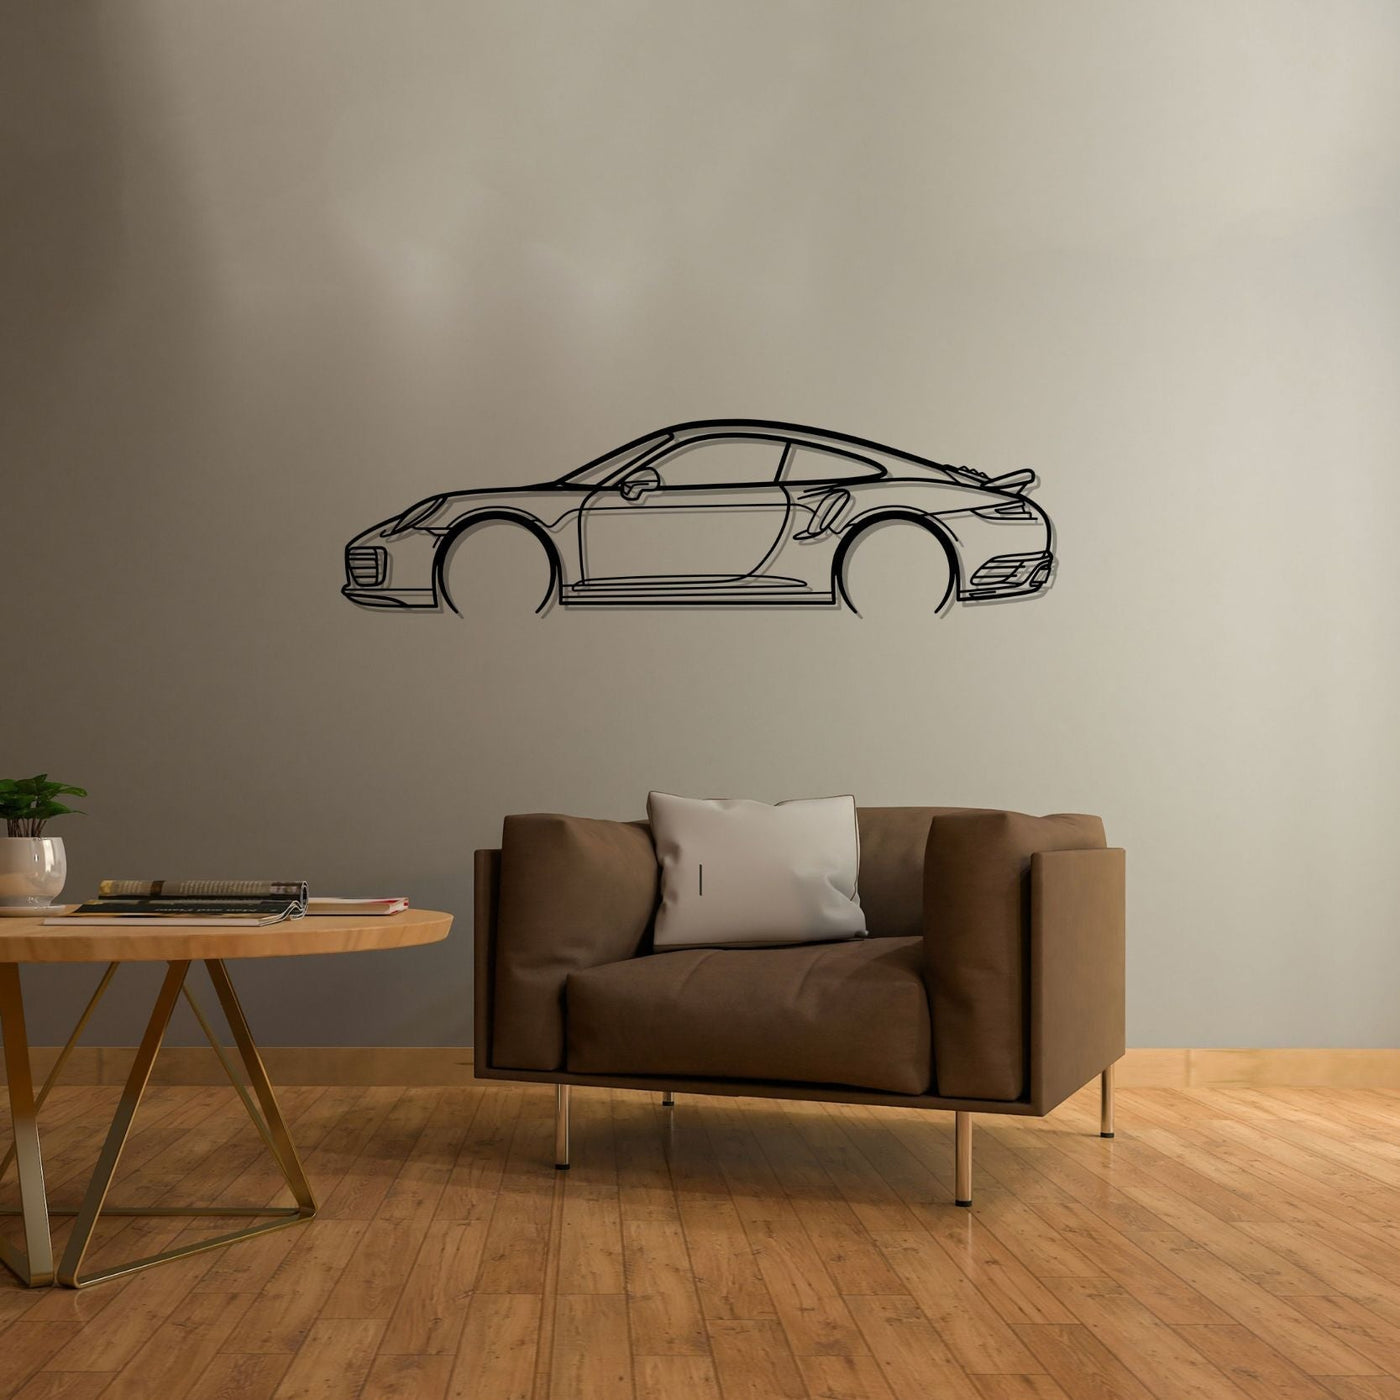 911 model 991 Turbo S Detailed Silhouette Metal Wall Art